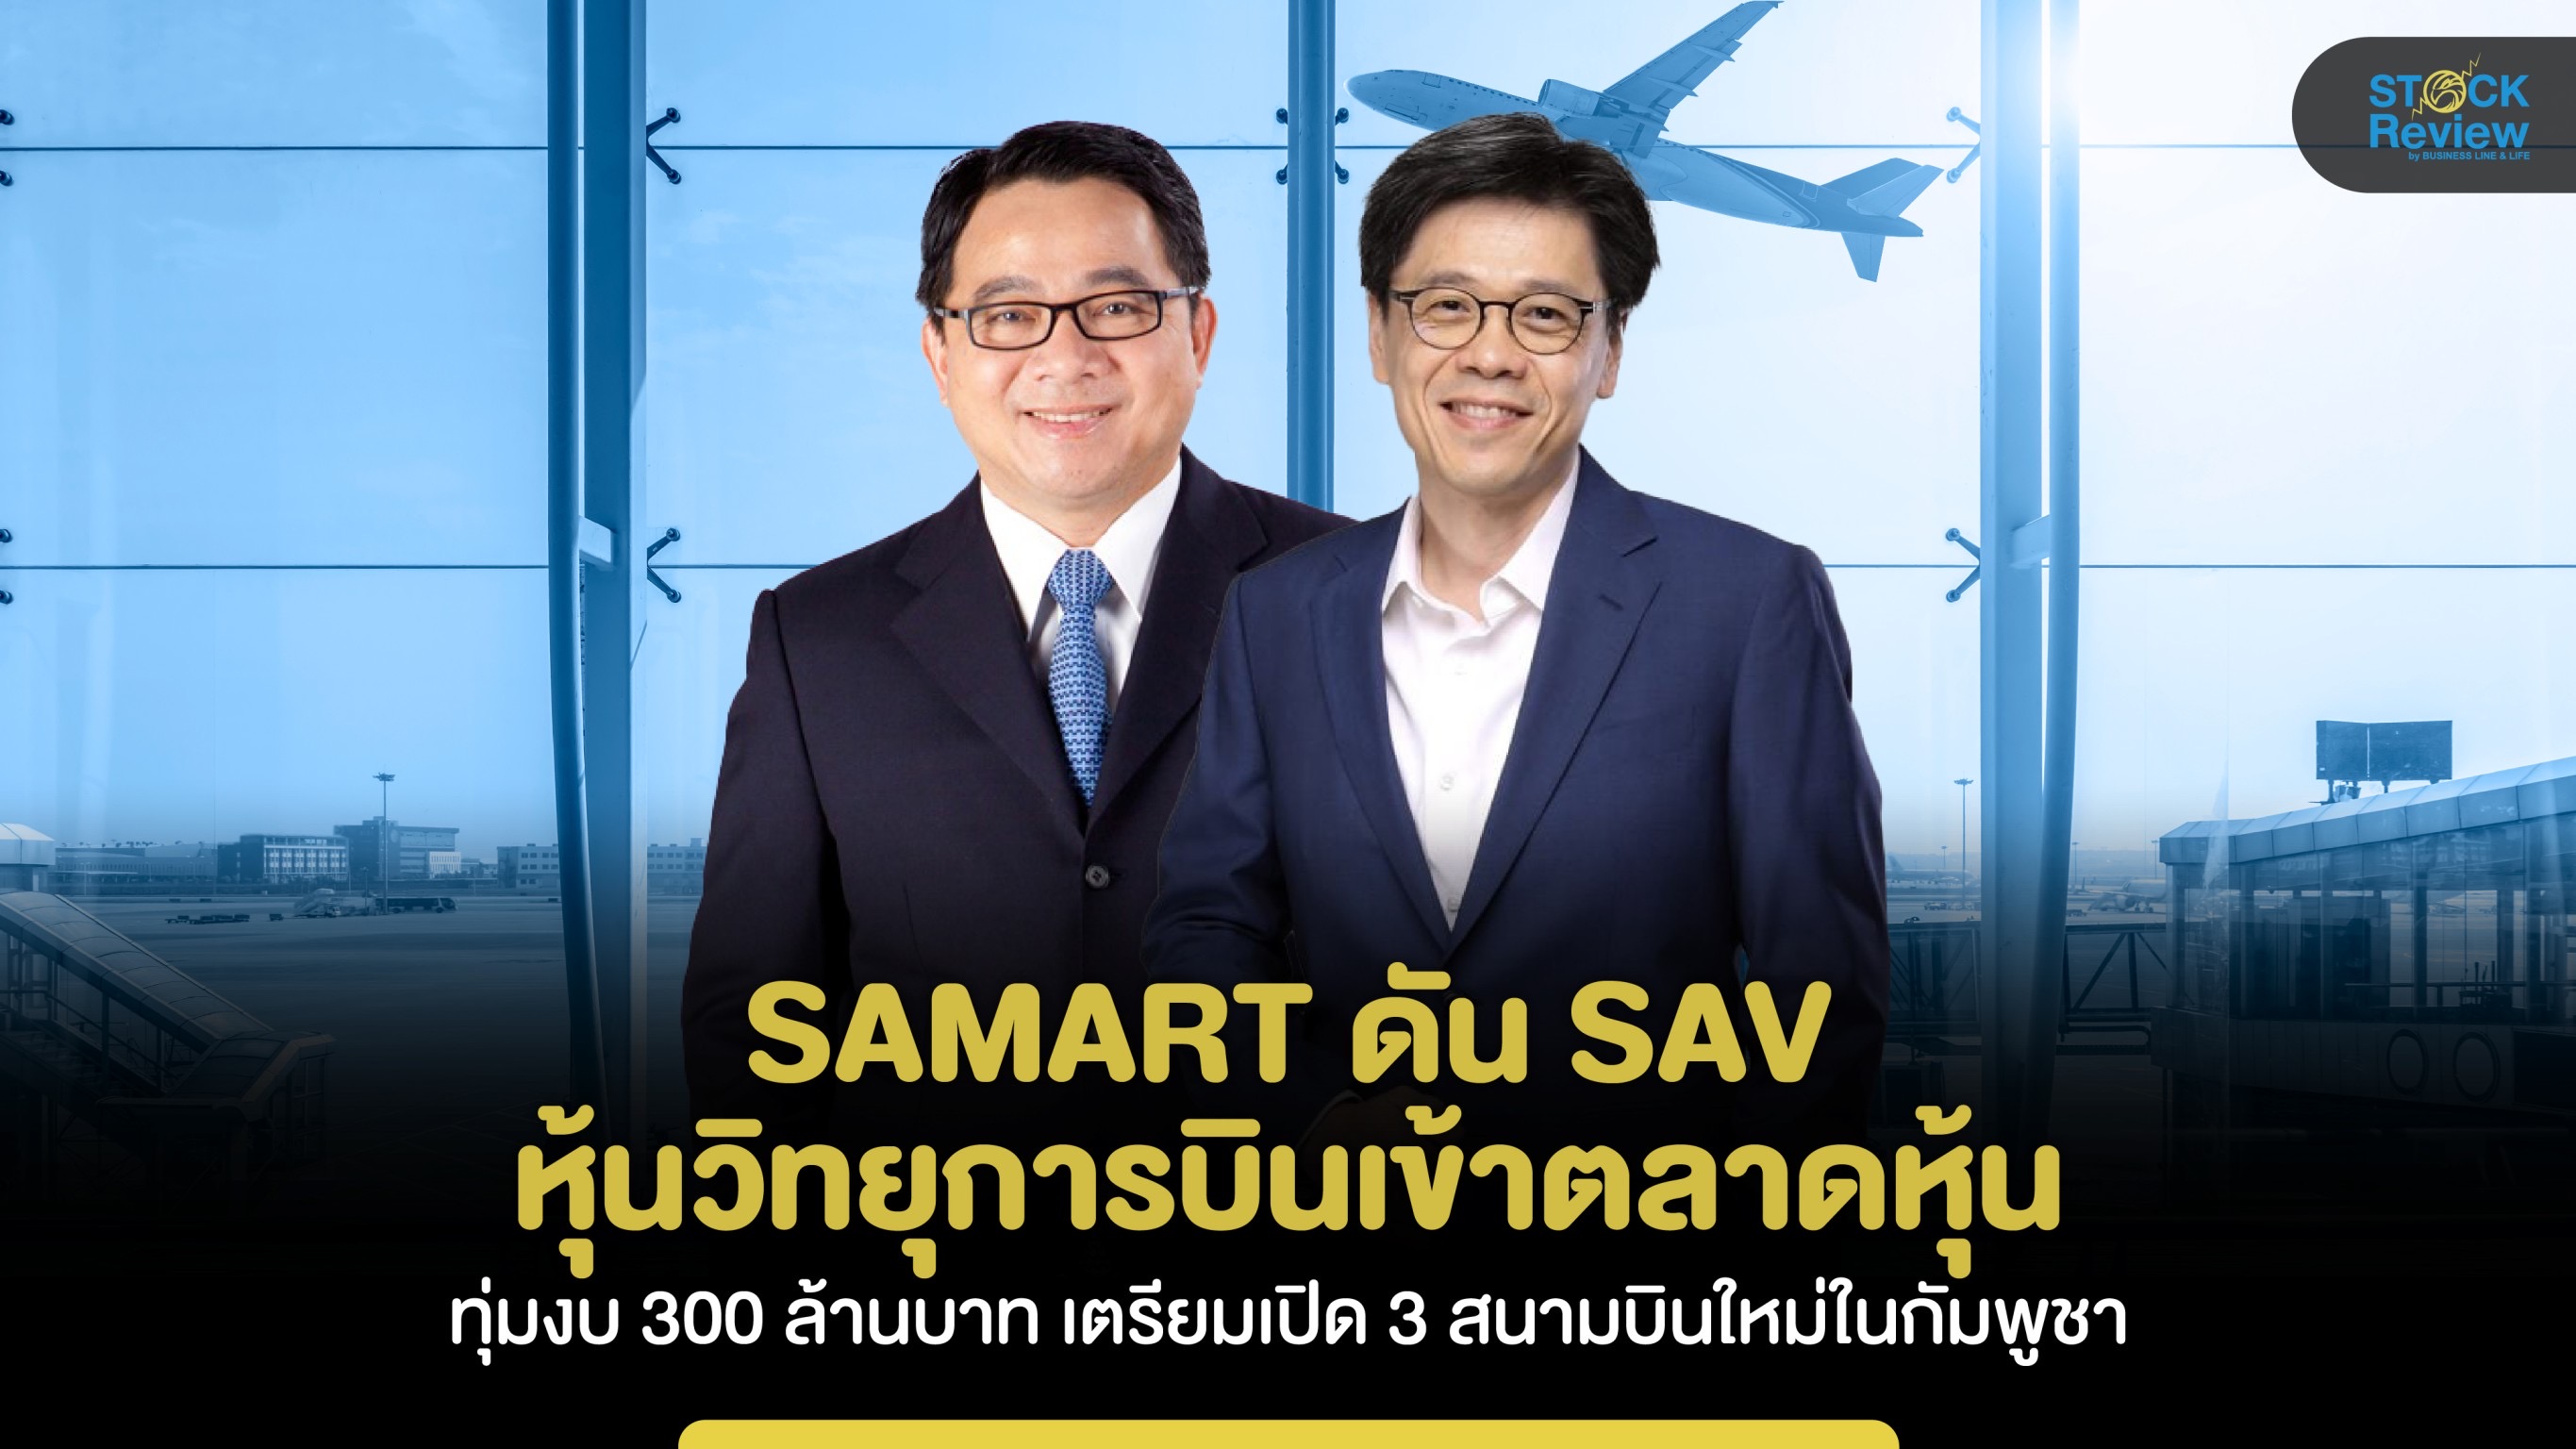 SAMART  ดัน SAV หุ้นวิทยุการบินเข้าตลาดหุ้นQ3 เตรียมเปิด 3 สนามบินใหม่ในกัมพูชา